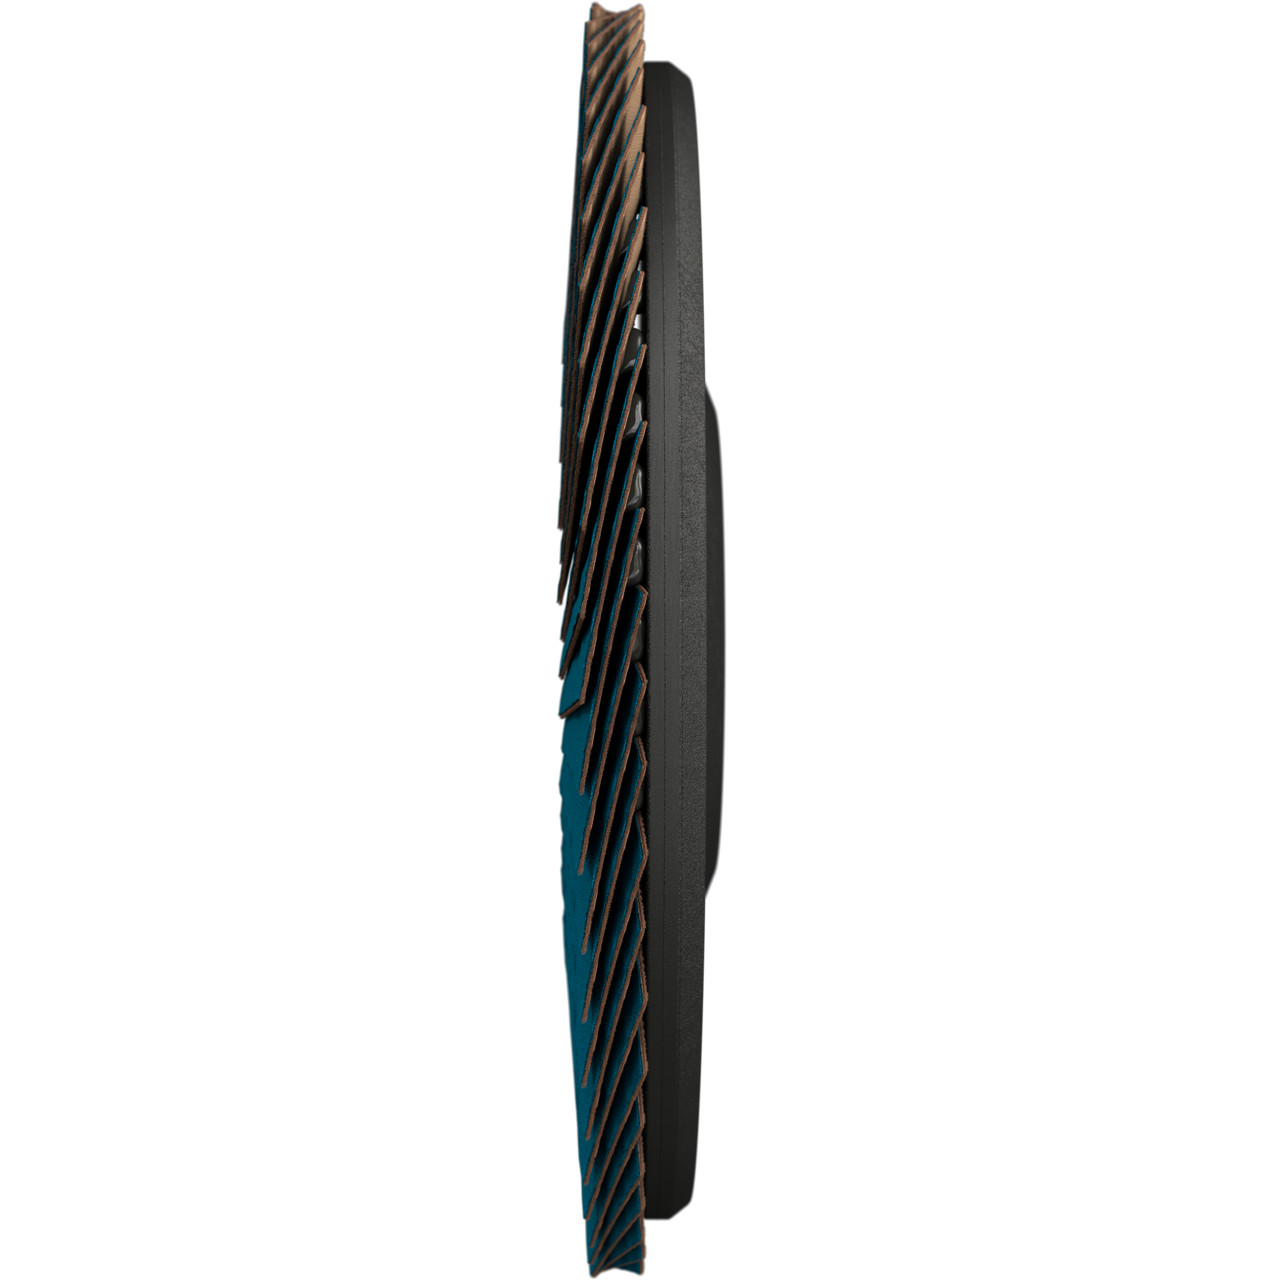 TYROLIT Fächerscheibe DxH 115x22,23 LONGLIFE für Stahl, P60, Form: 28N - gerade Ausführung (Kunststoffträgerkörper), Art. 34063394